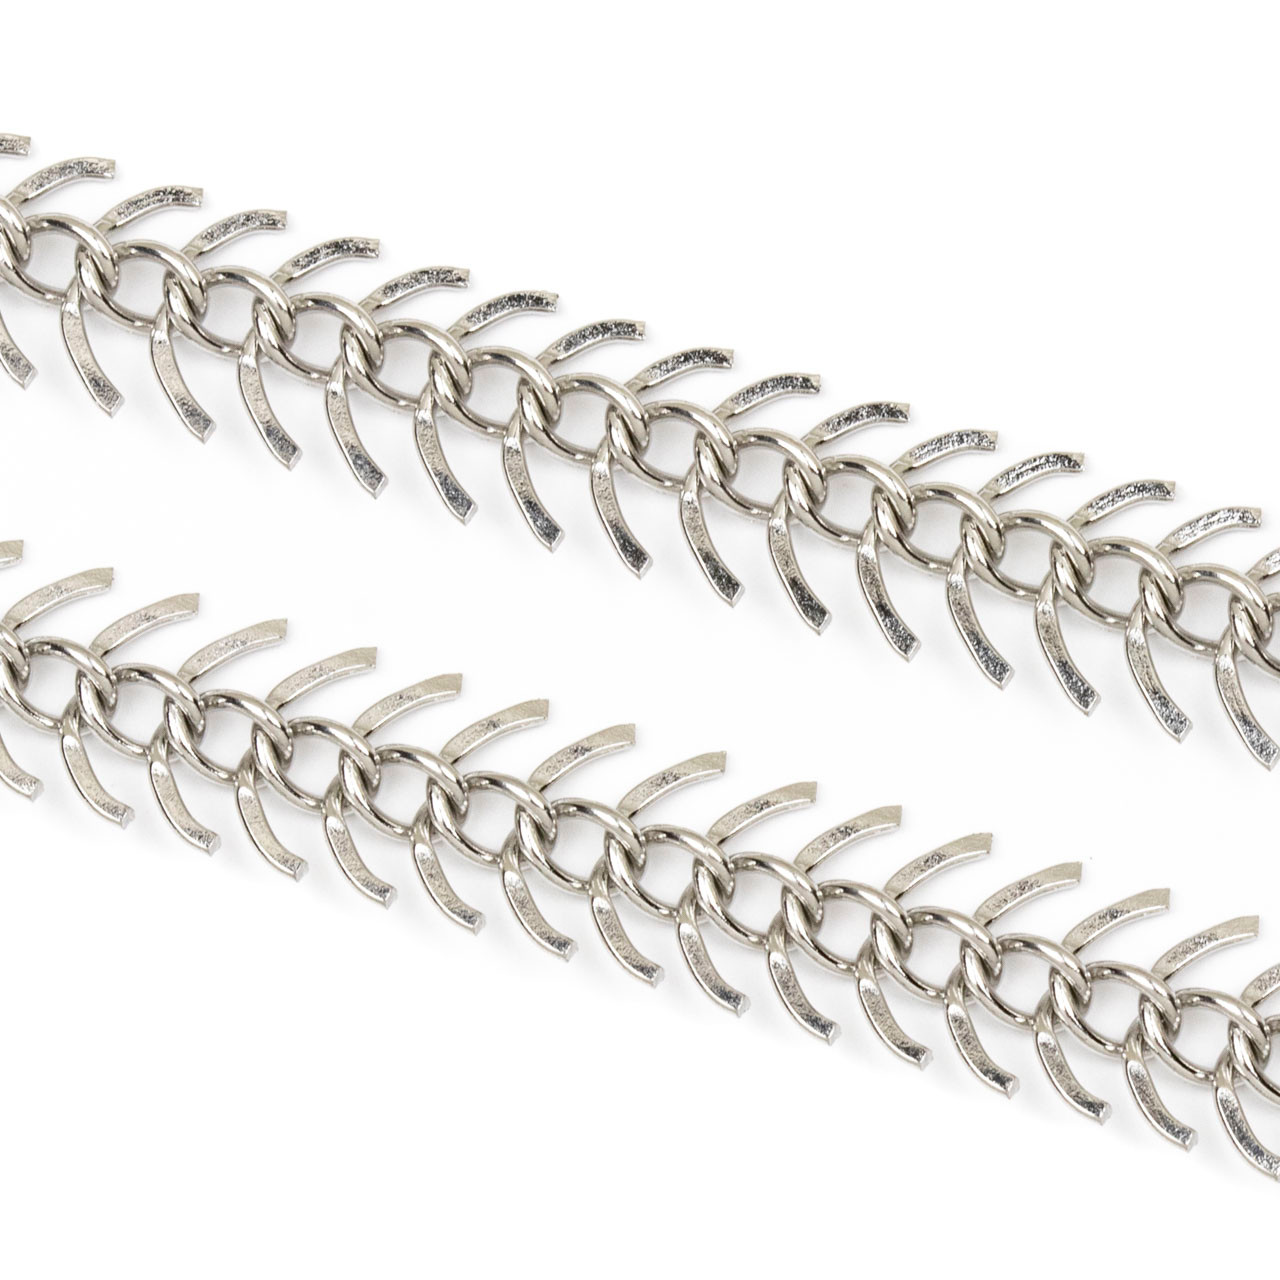 Reizen Kaliber Groenten Natural Silver Stainless Steel 6x11.5mm Fishbone Chain - 10 meter spool